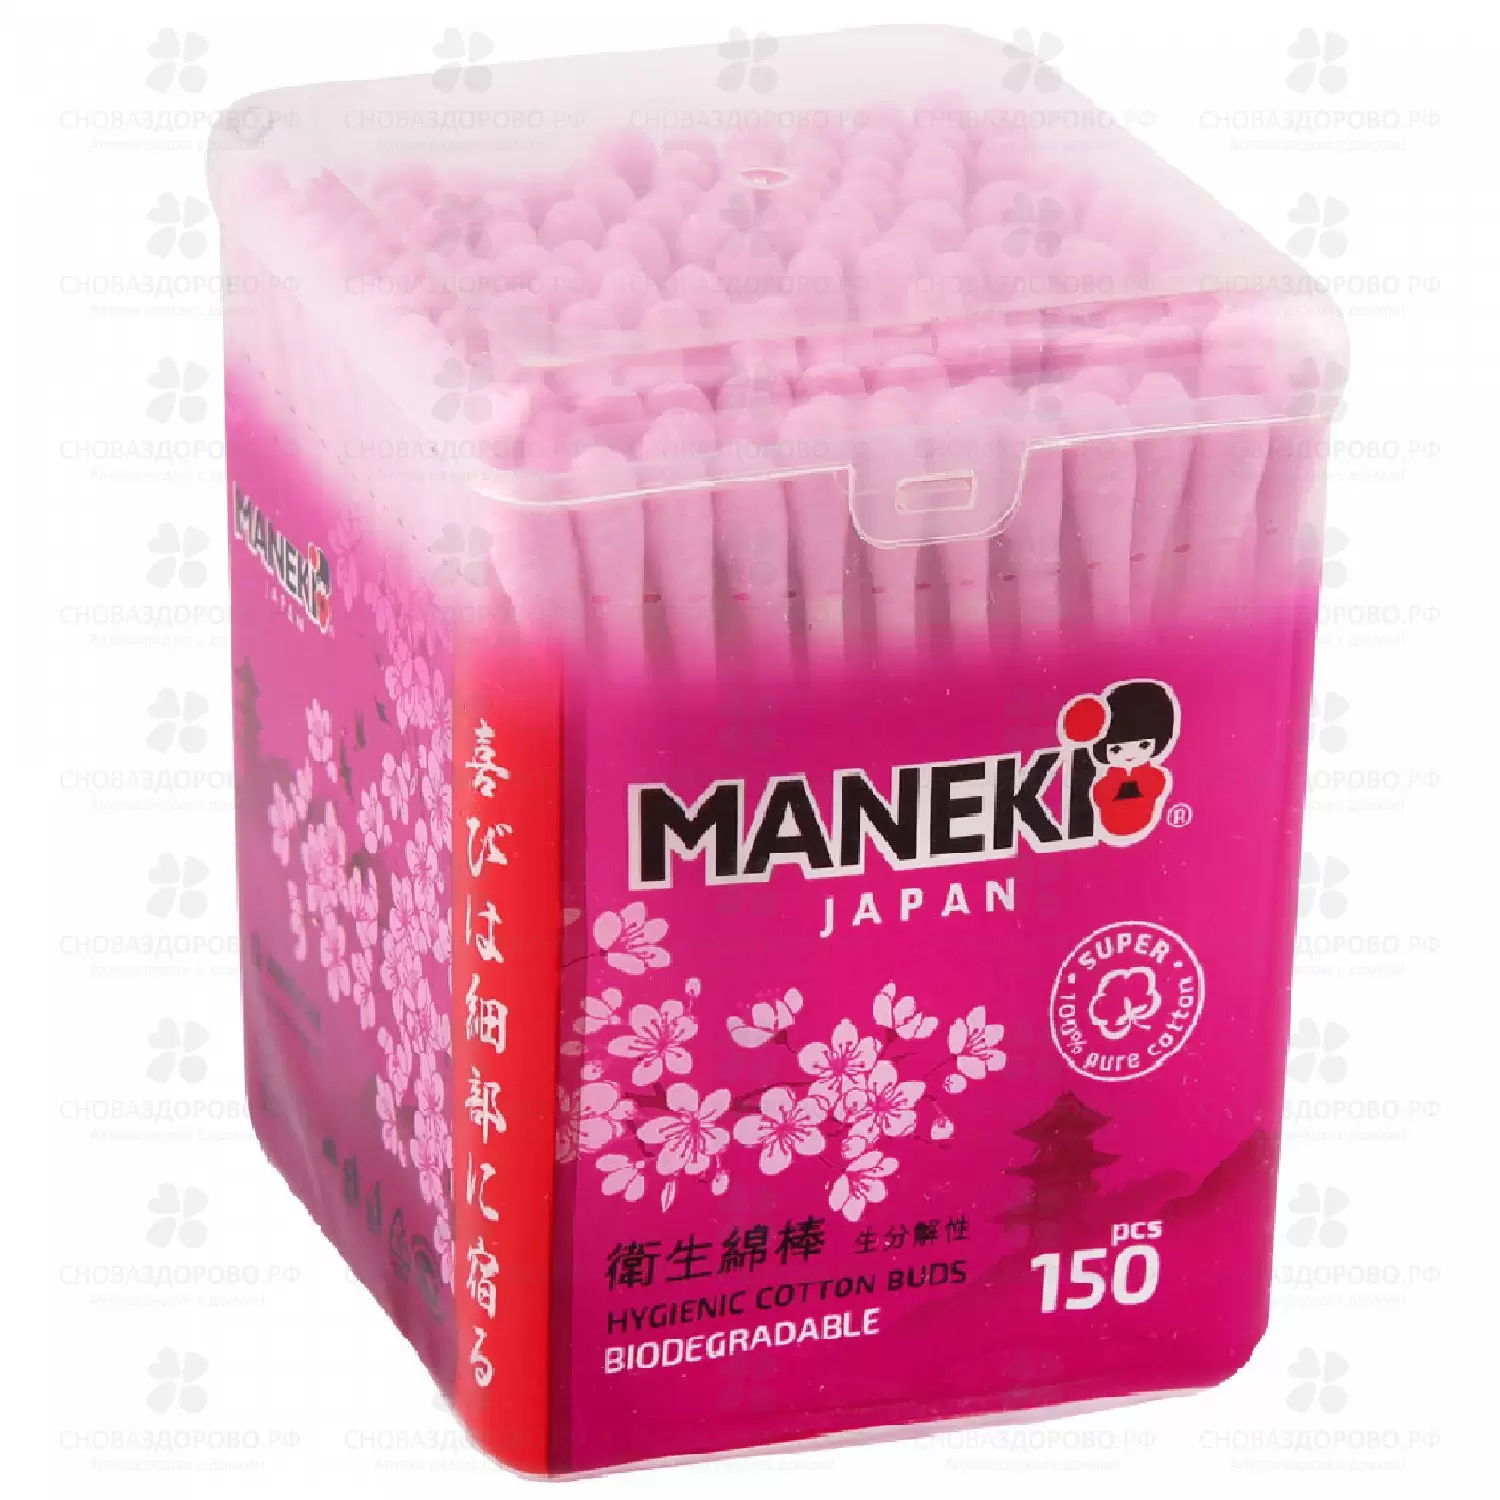 Ватные палочки МАНЕКИ Сакура №150 розовый бум. стик (пласт. коробка) ✅ 33308/06995 | Сноваздорово.рф